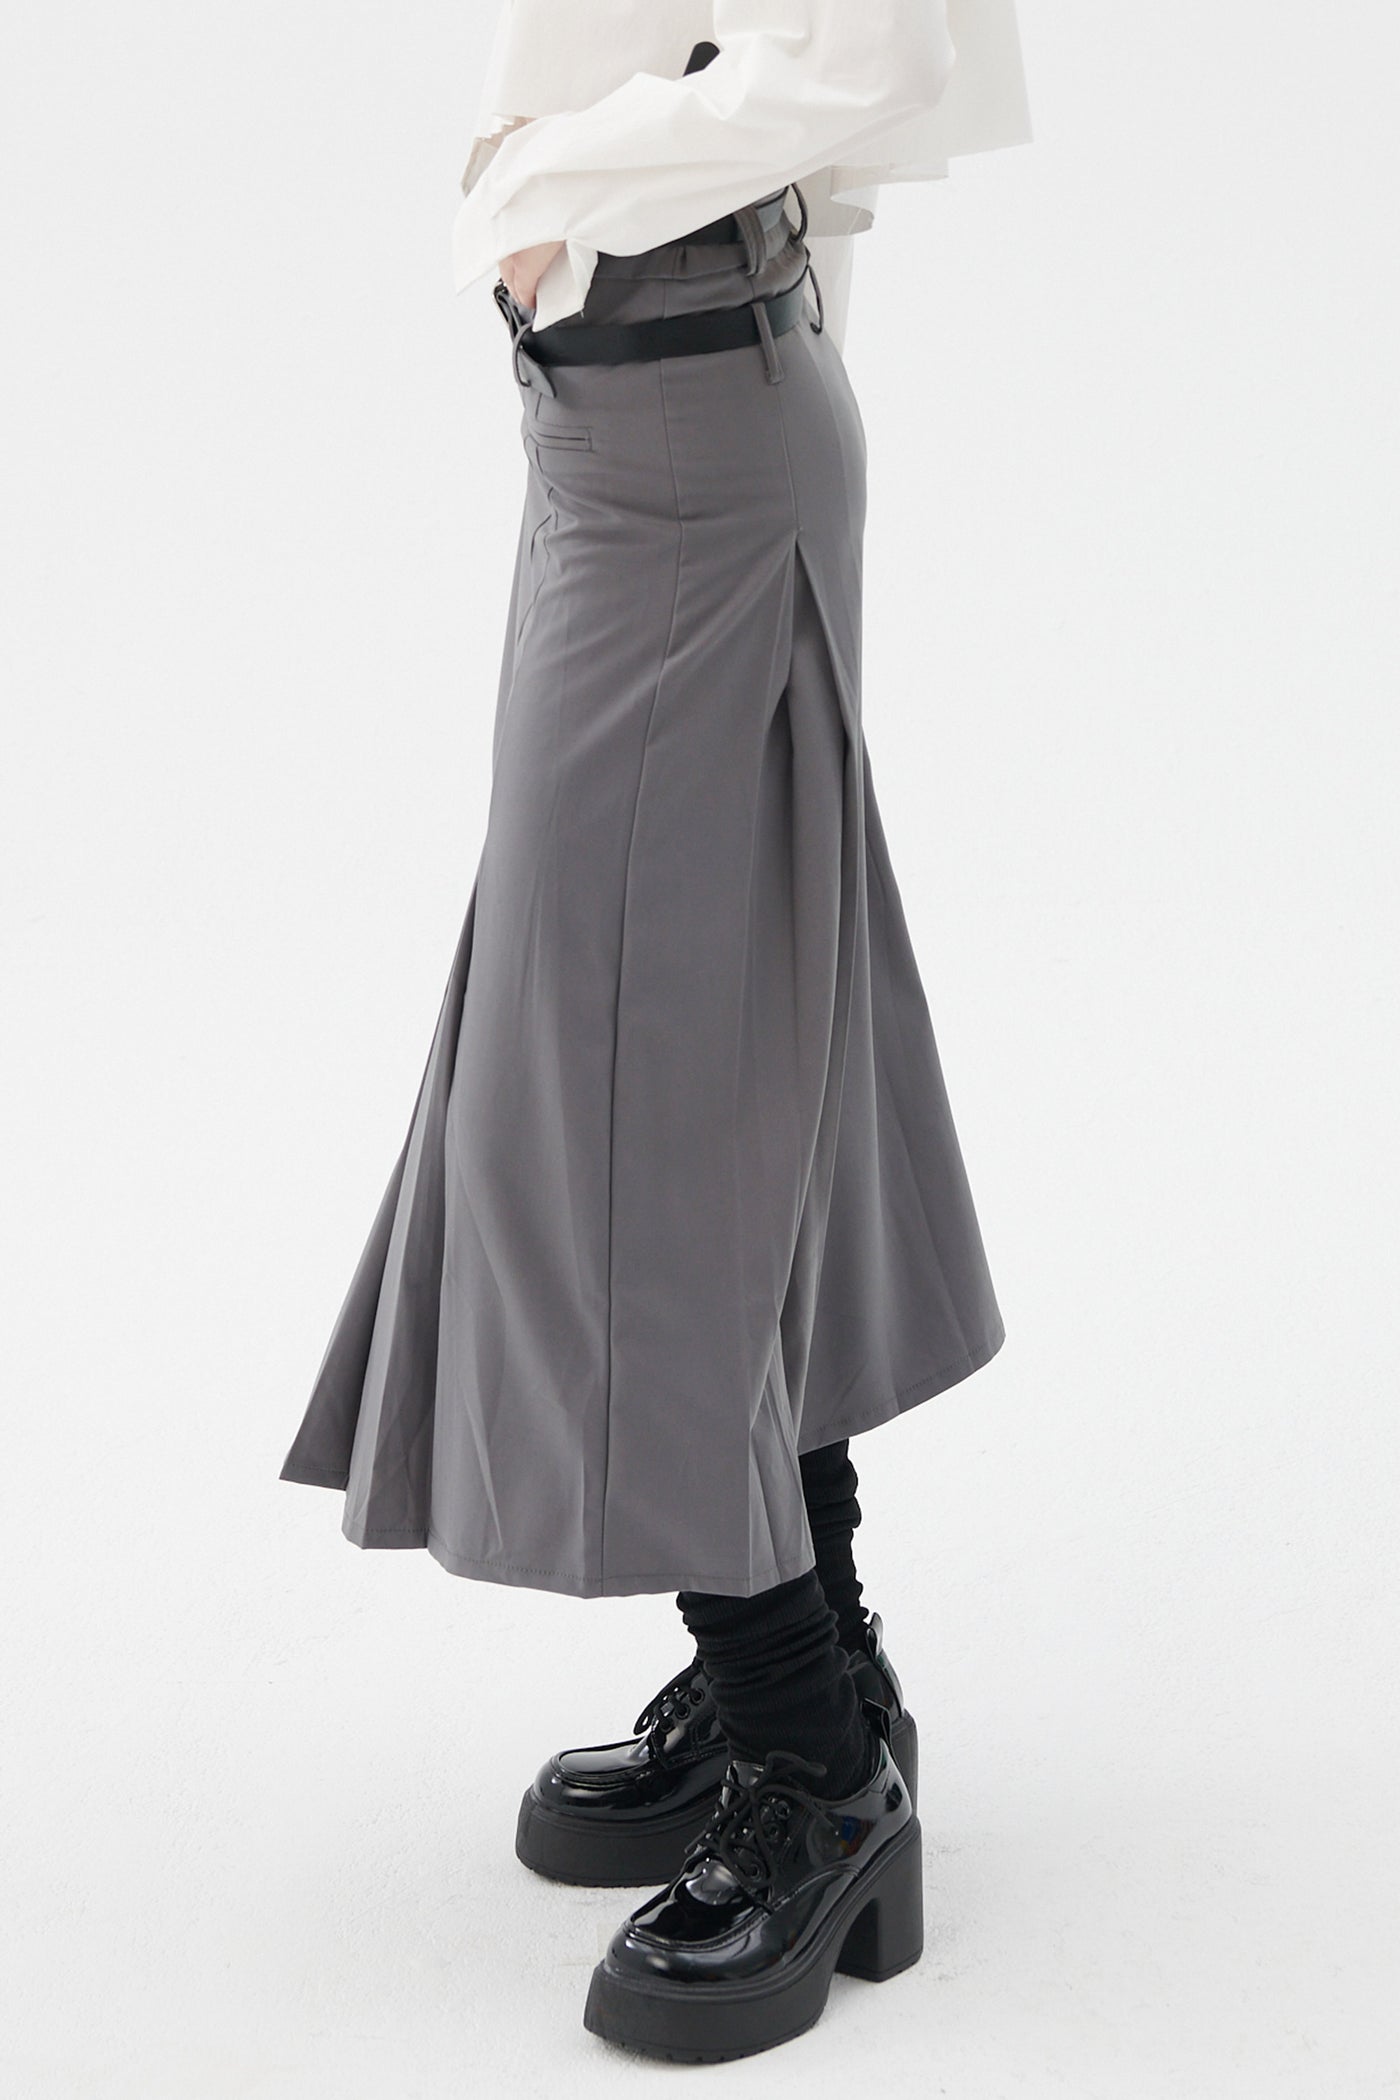 storets.com Paige Midi Skirt (FREE BELTS!)